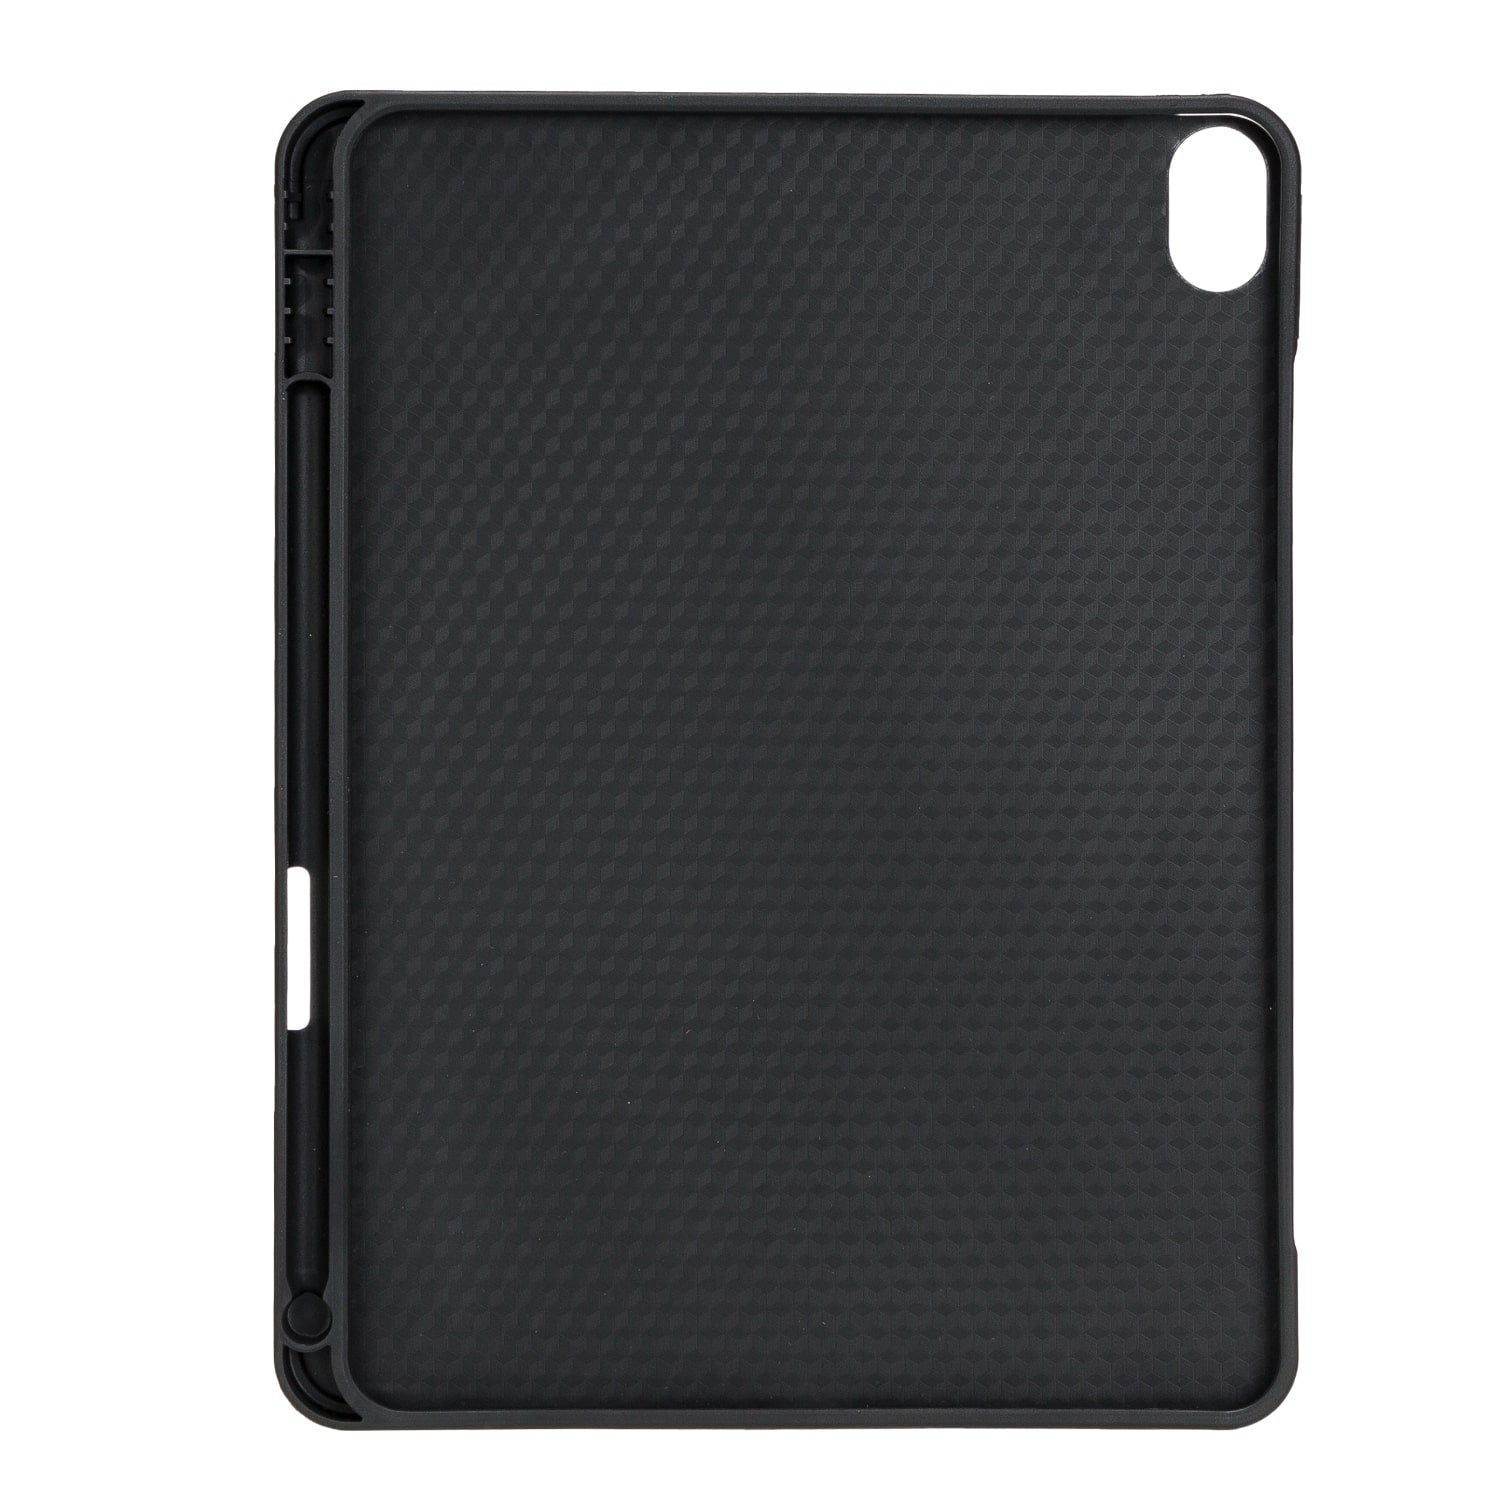 Brown Leather iPad Air 10.9 Inc Smart Folio Case with Apple Pen Holder - Bomonti - 6